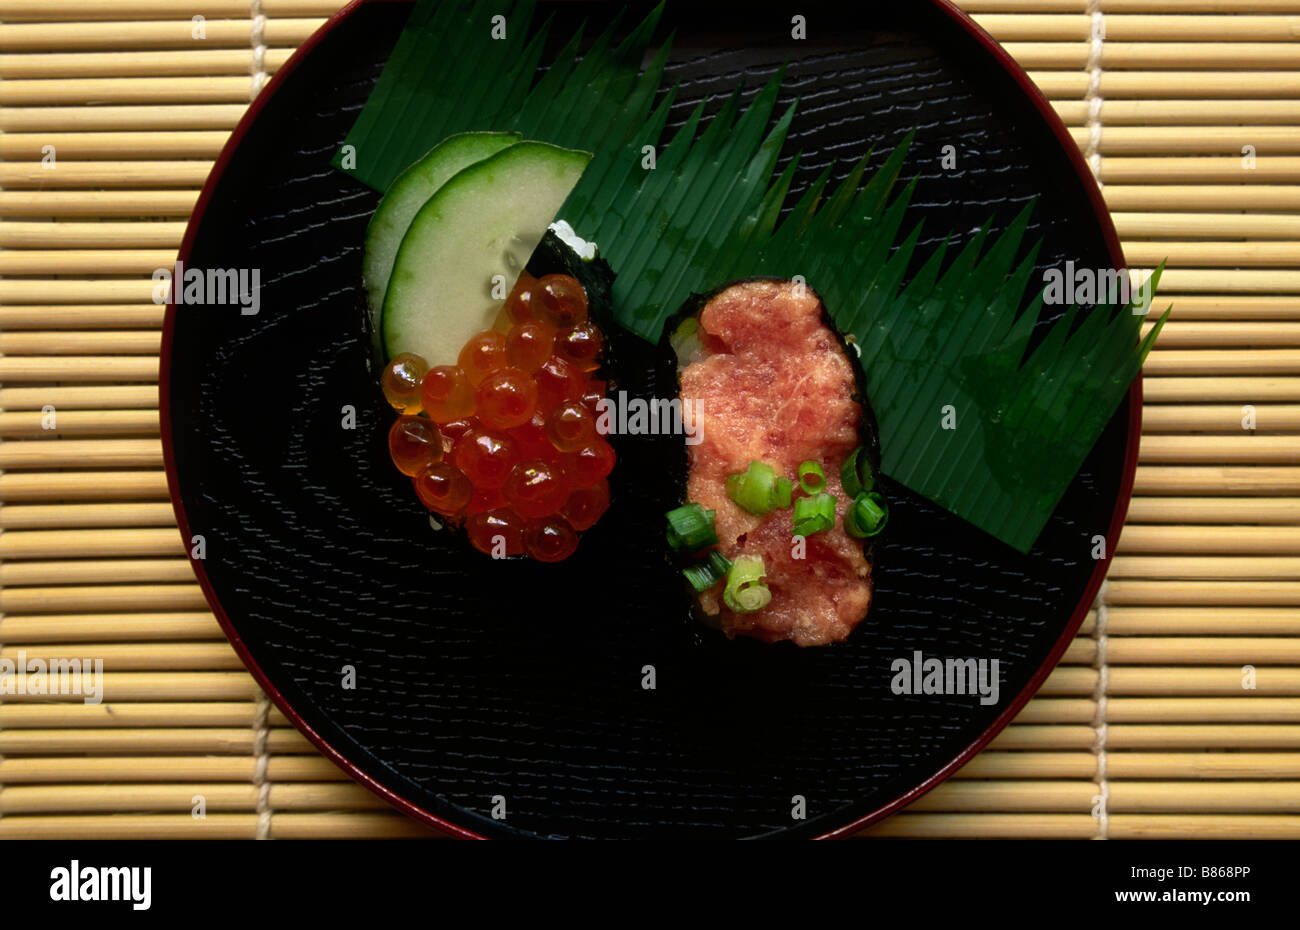 https://c8.alamy.com/comp/B868PP/japan-sushi-B868PP.jpg